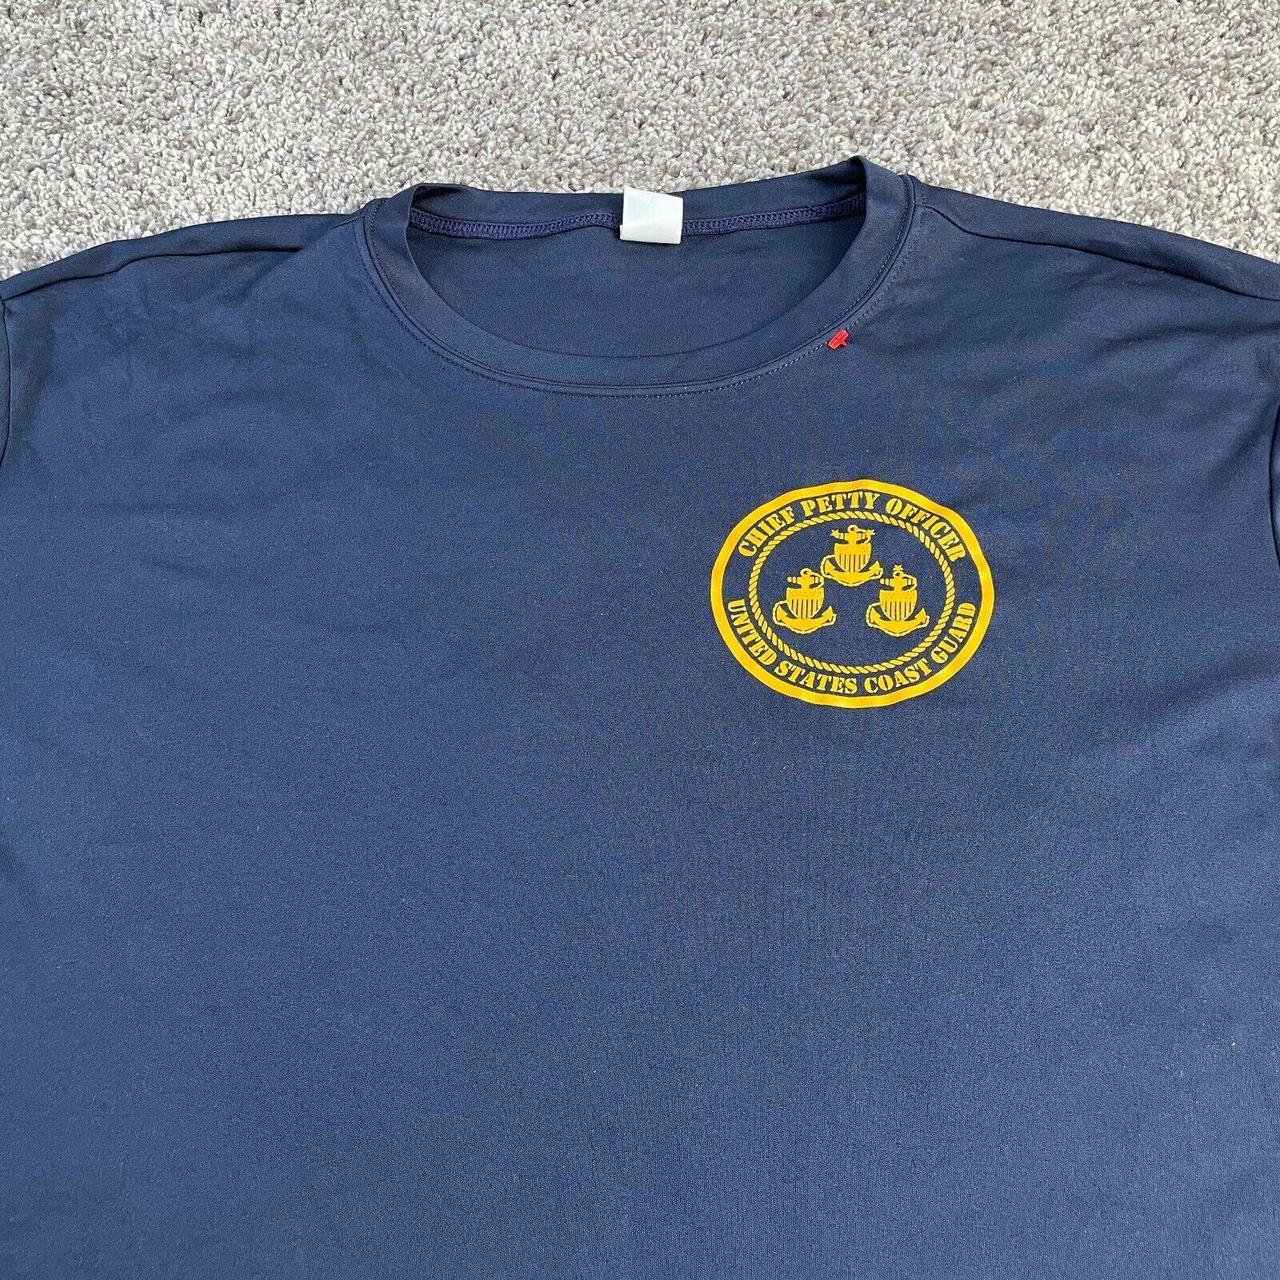 Coast Men's Blue and Yellow Shirt (2)